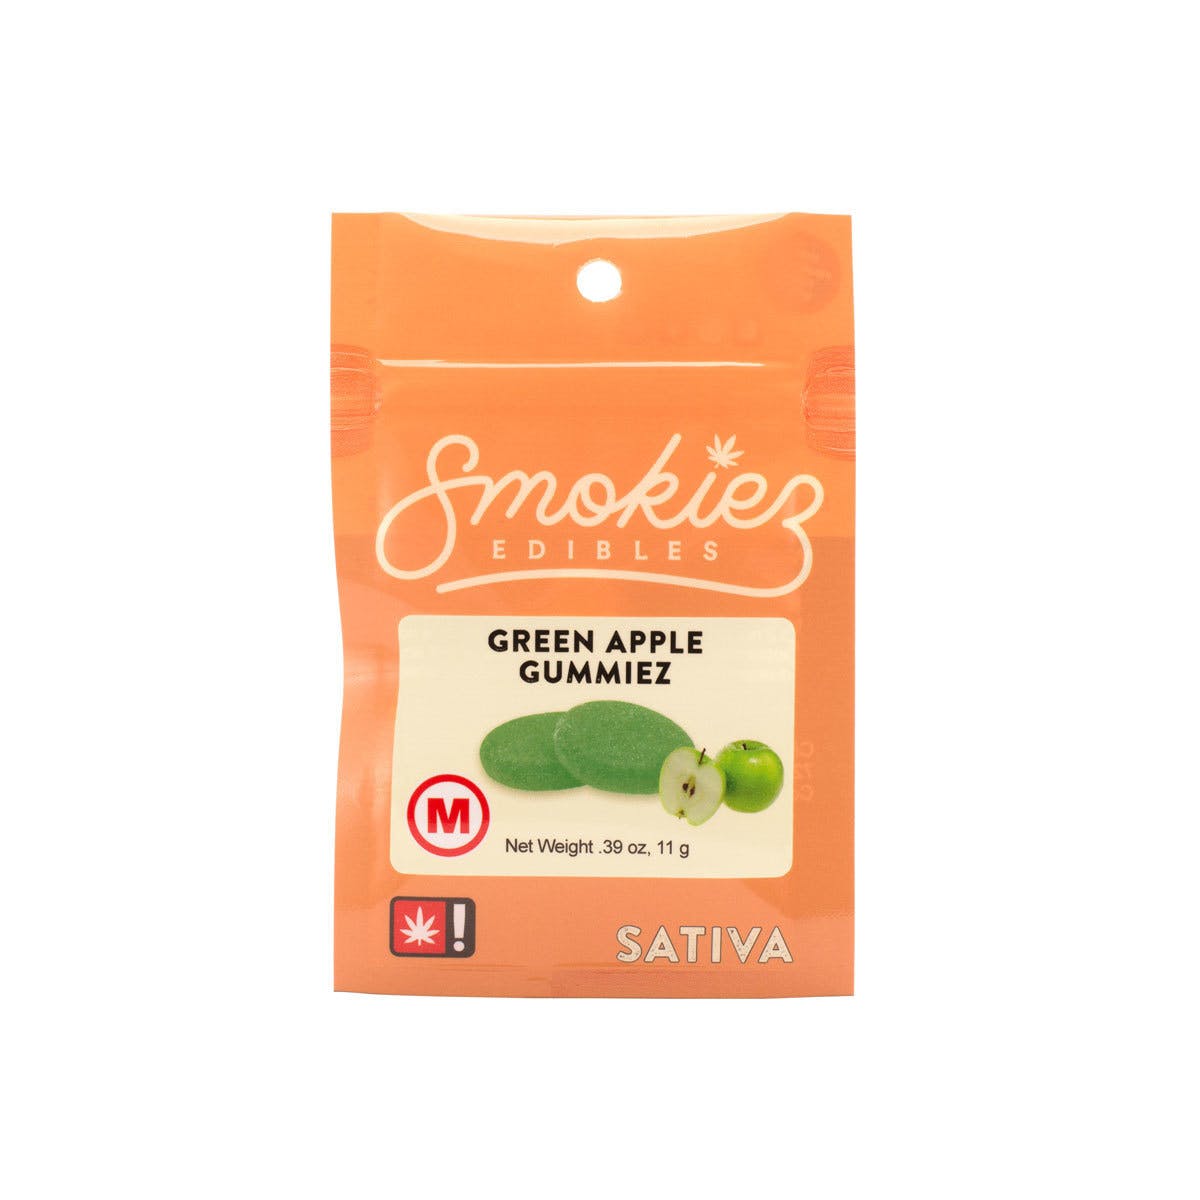 edible-smokiez-edibles-med-sativa-green-apple-gummiez-2c-100mg